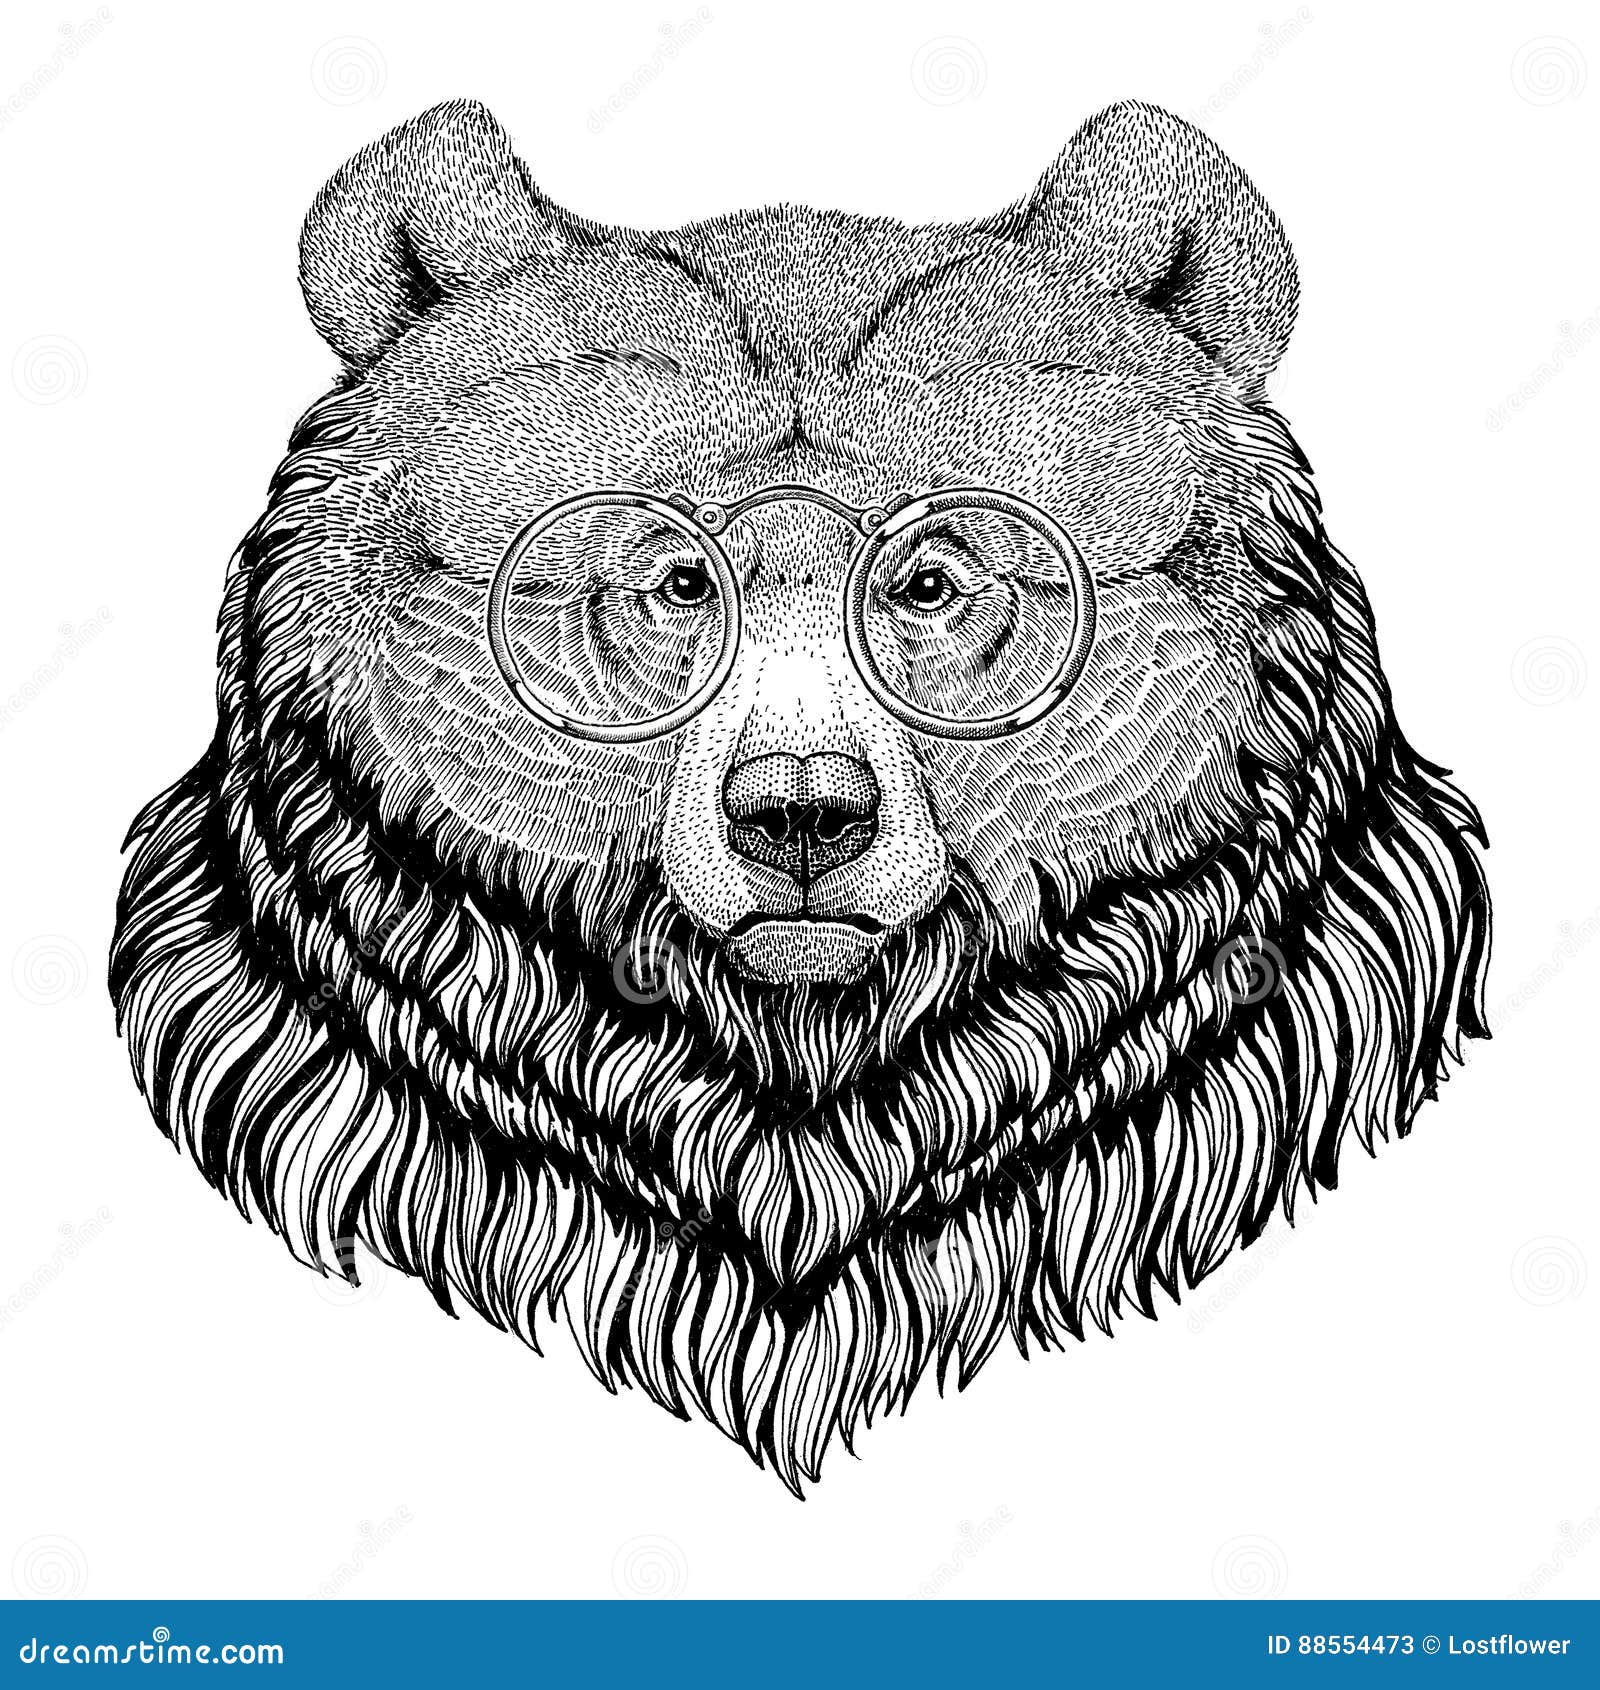 Bear tattoo art, symbol travel and tourism. portrait grizzly. • wall  stickers wildlife, wild nature, wild animals | myloview.com